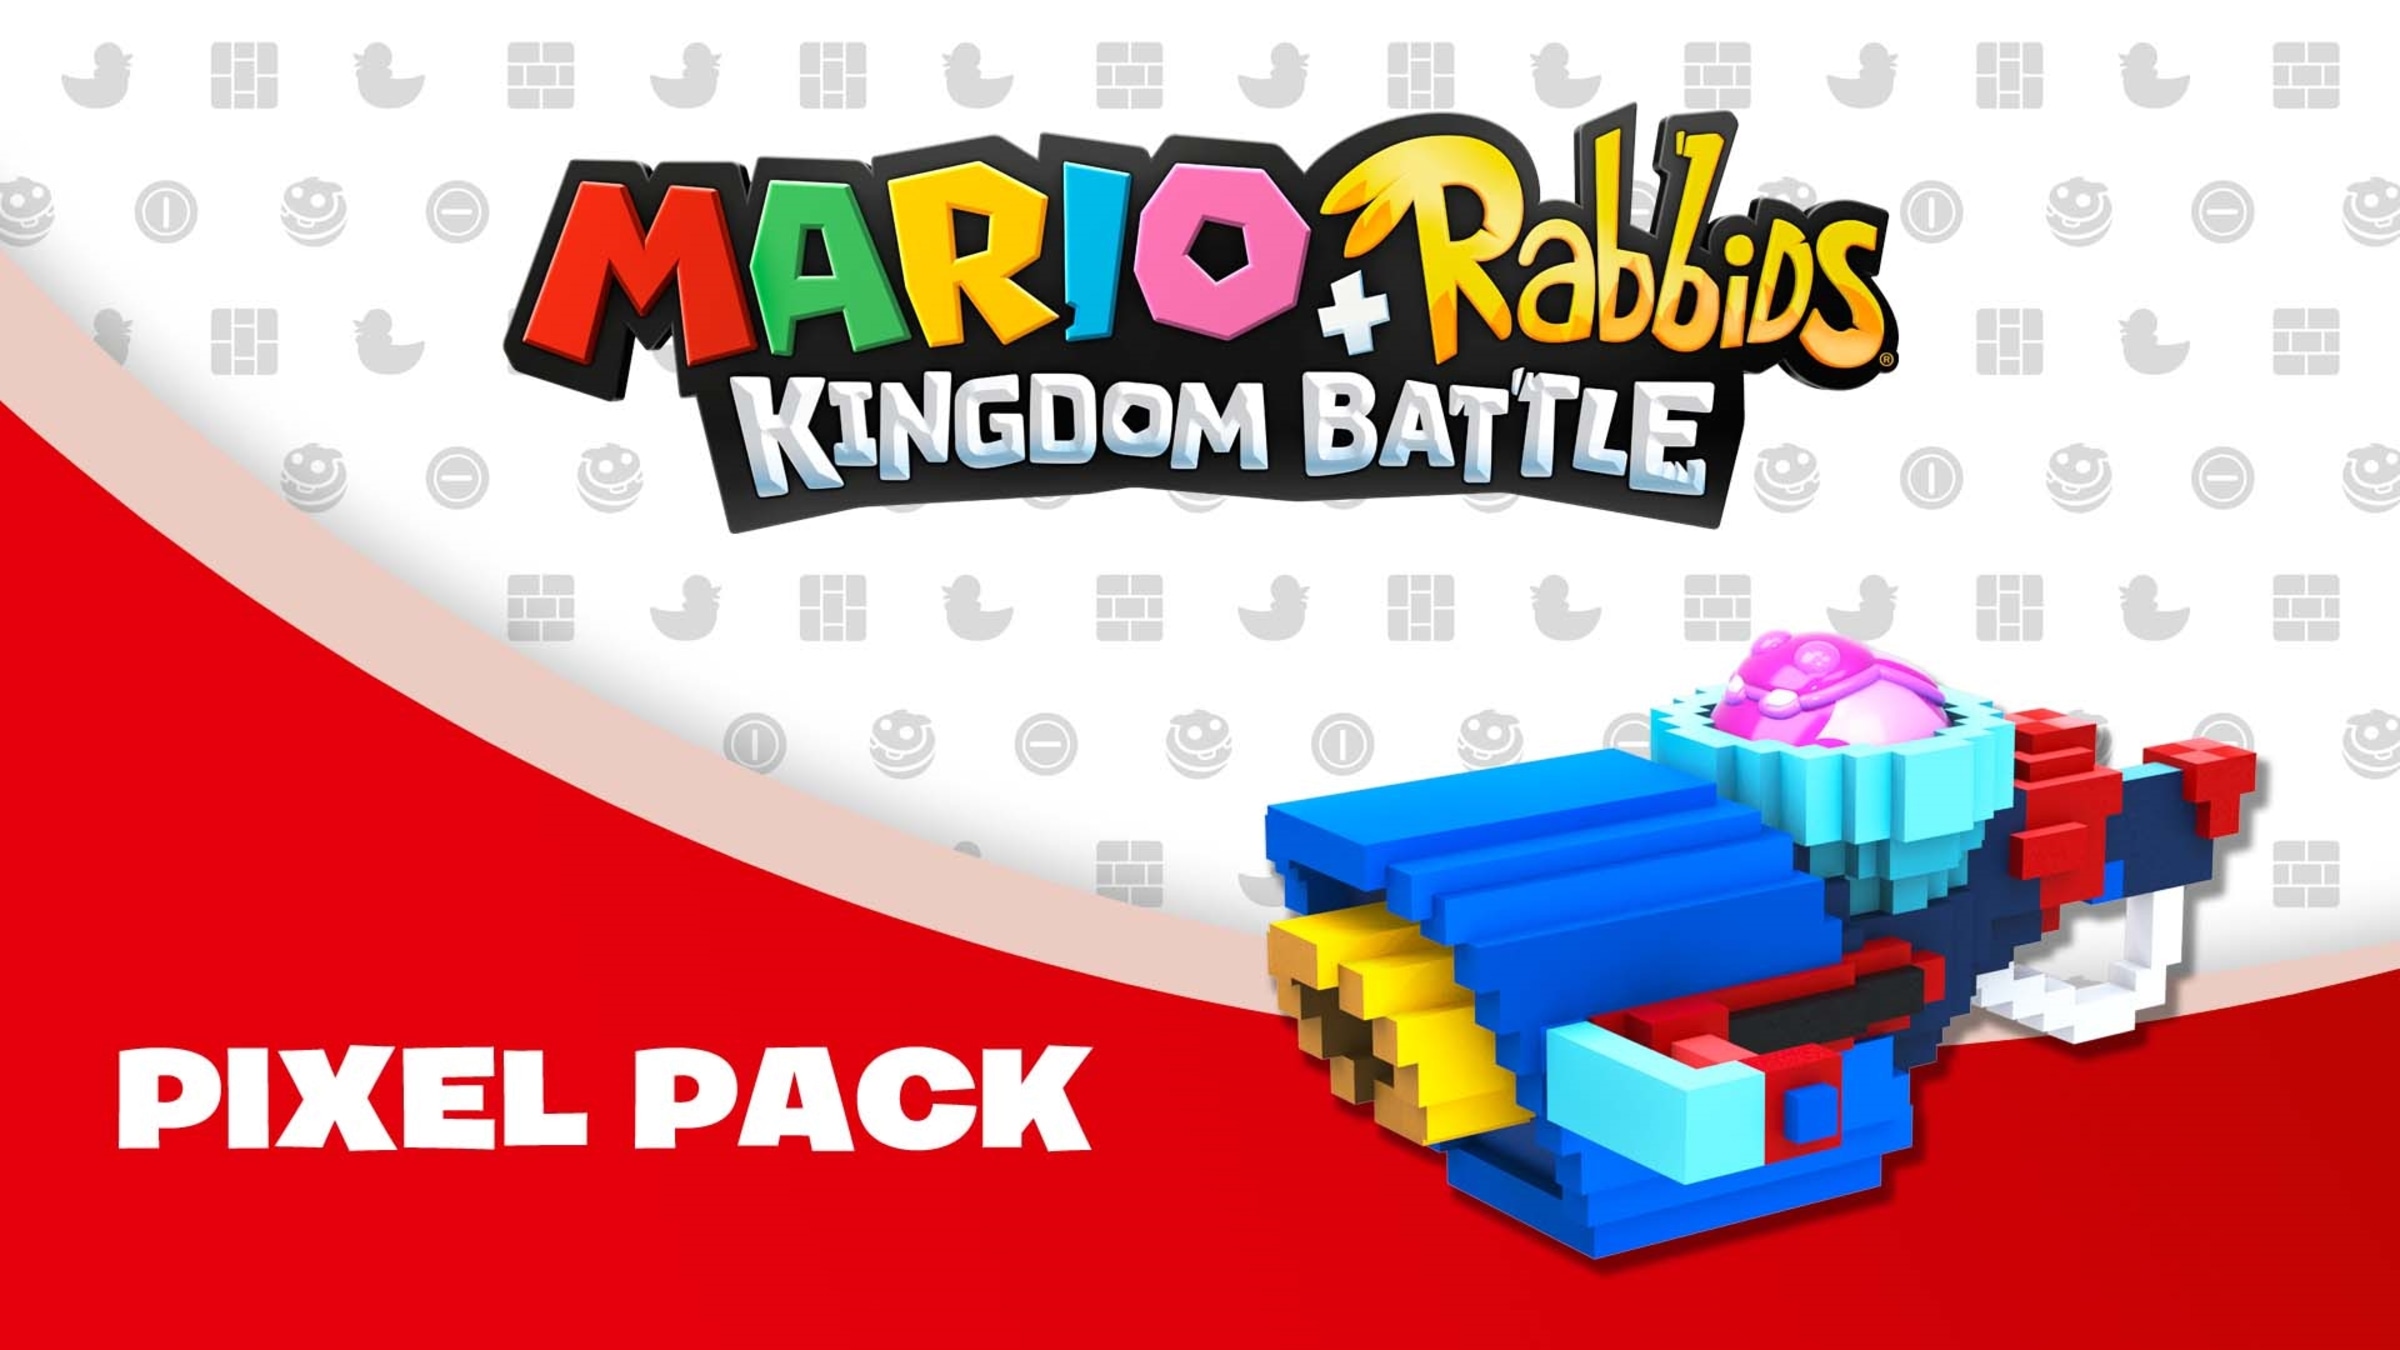 List of weapons in Mario + Rabbids Kingdom Battle - Super Mario